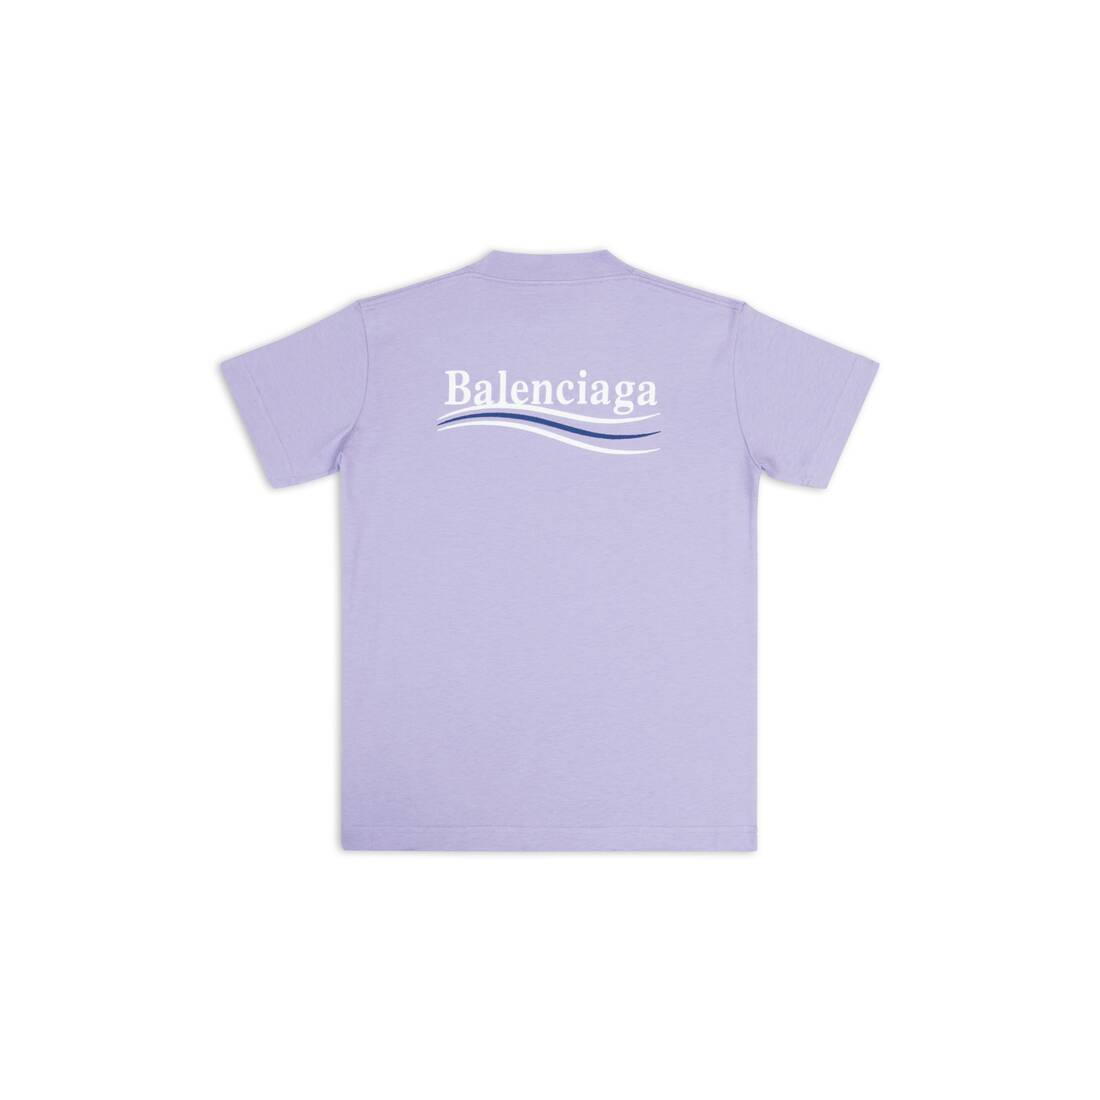 Purple Embroidered TShirt by Balenciaga on Sale